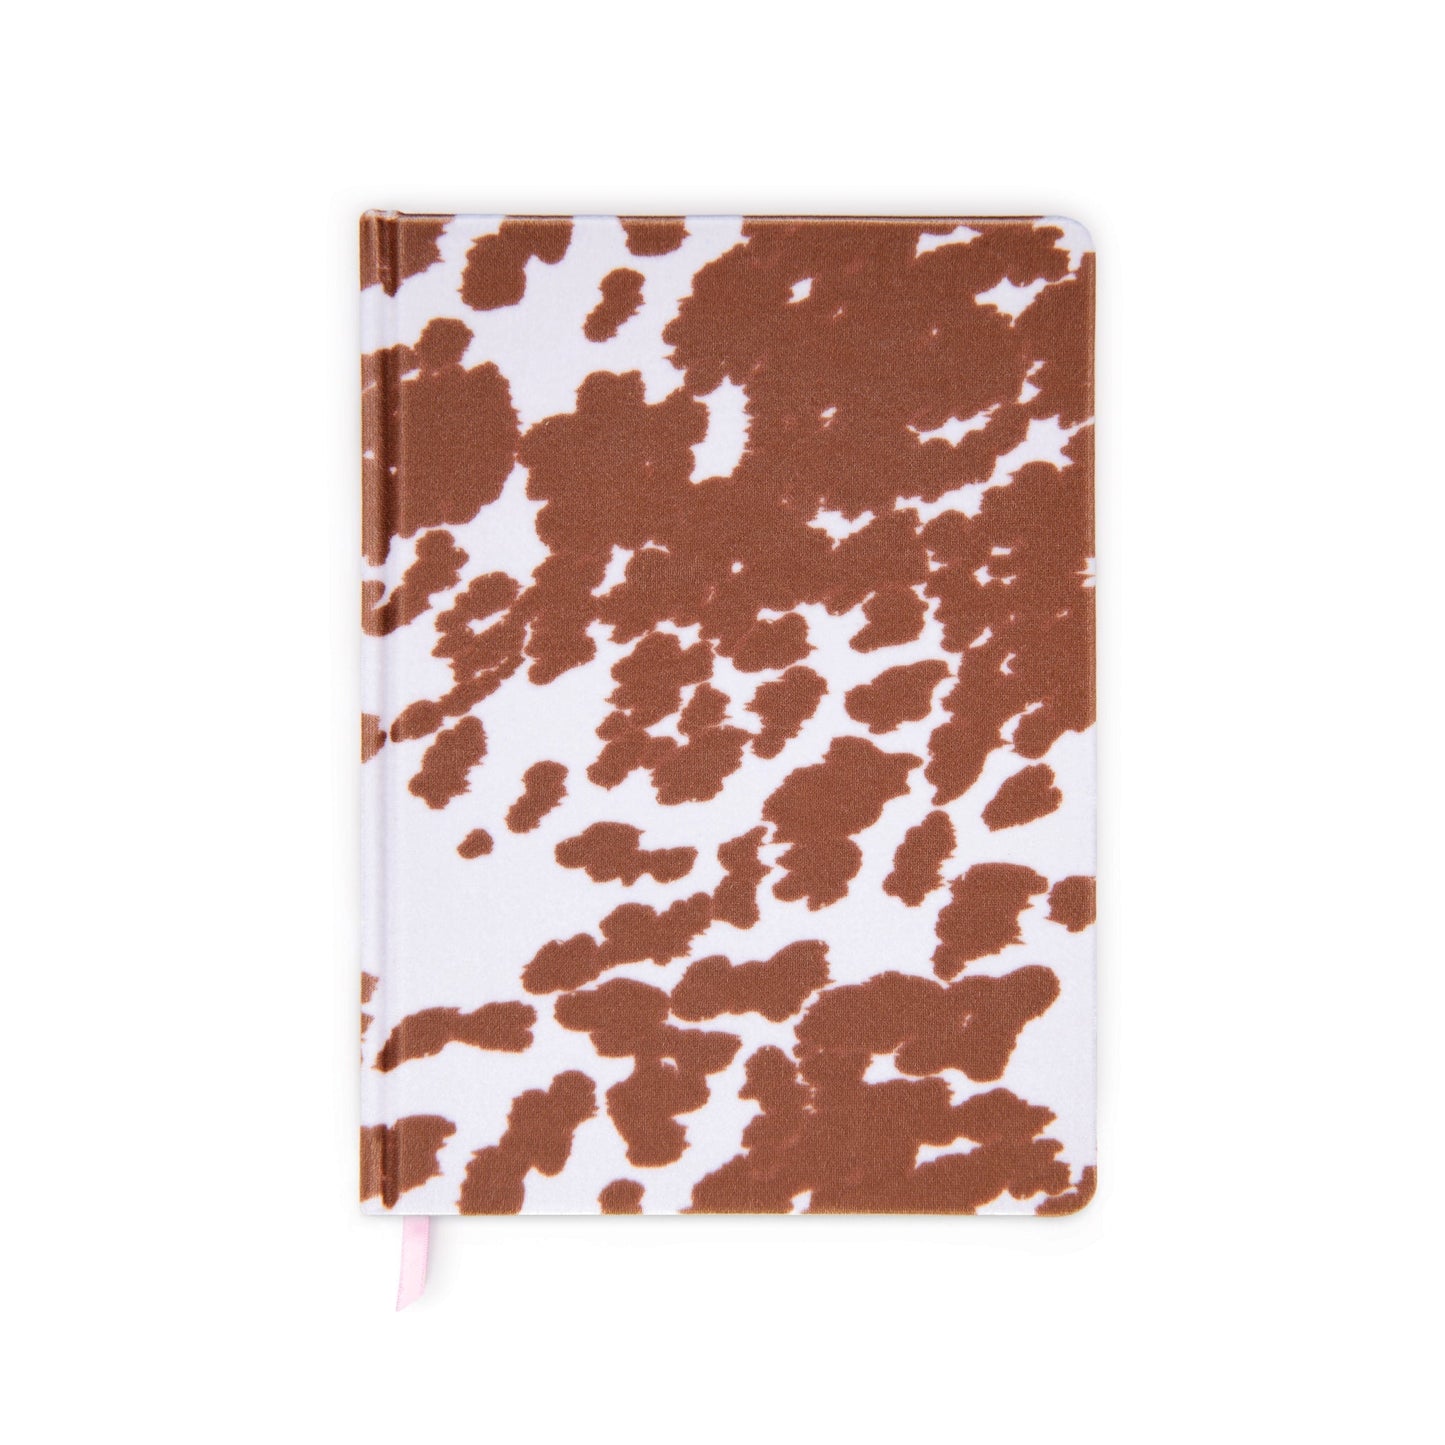 Cowprint jumbo journal on white background